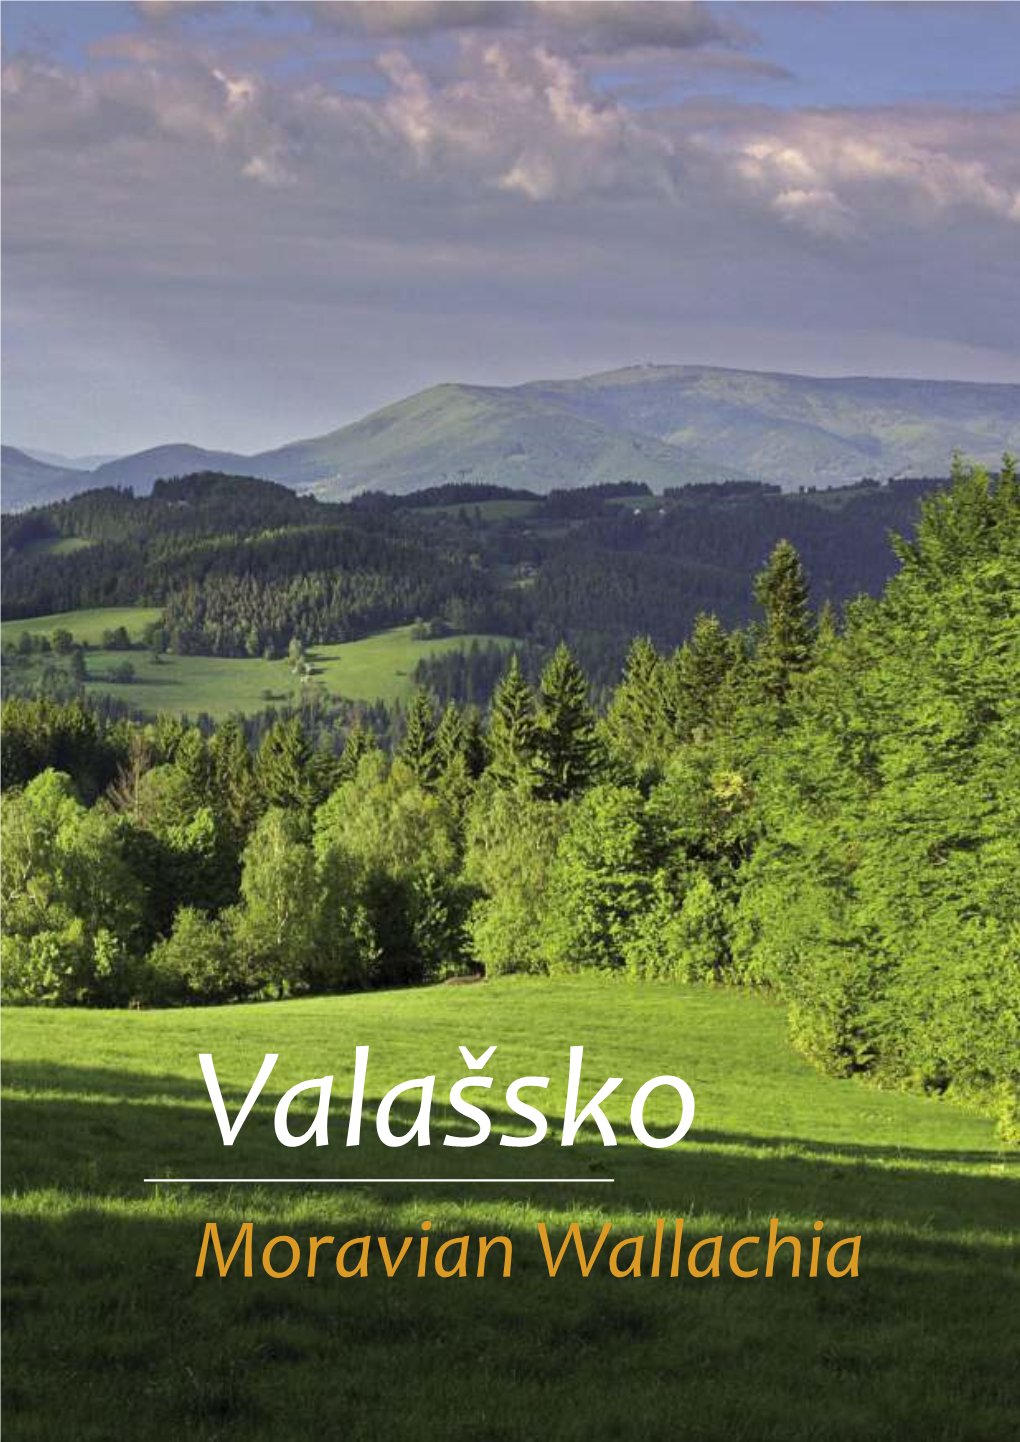 Image Publikace Valassko